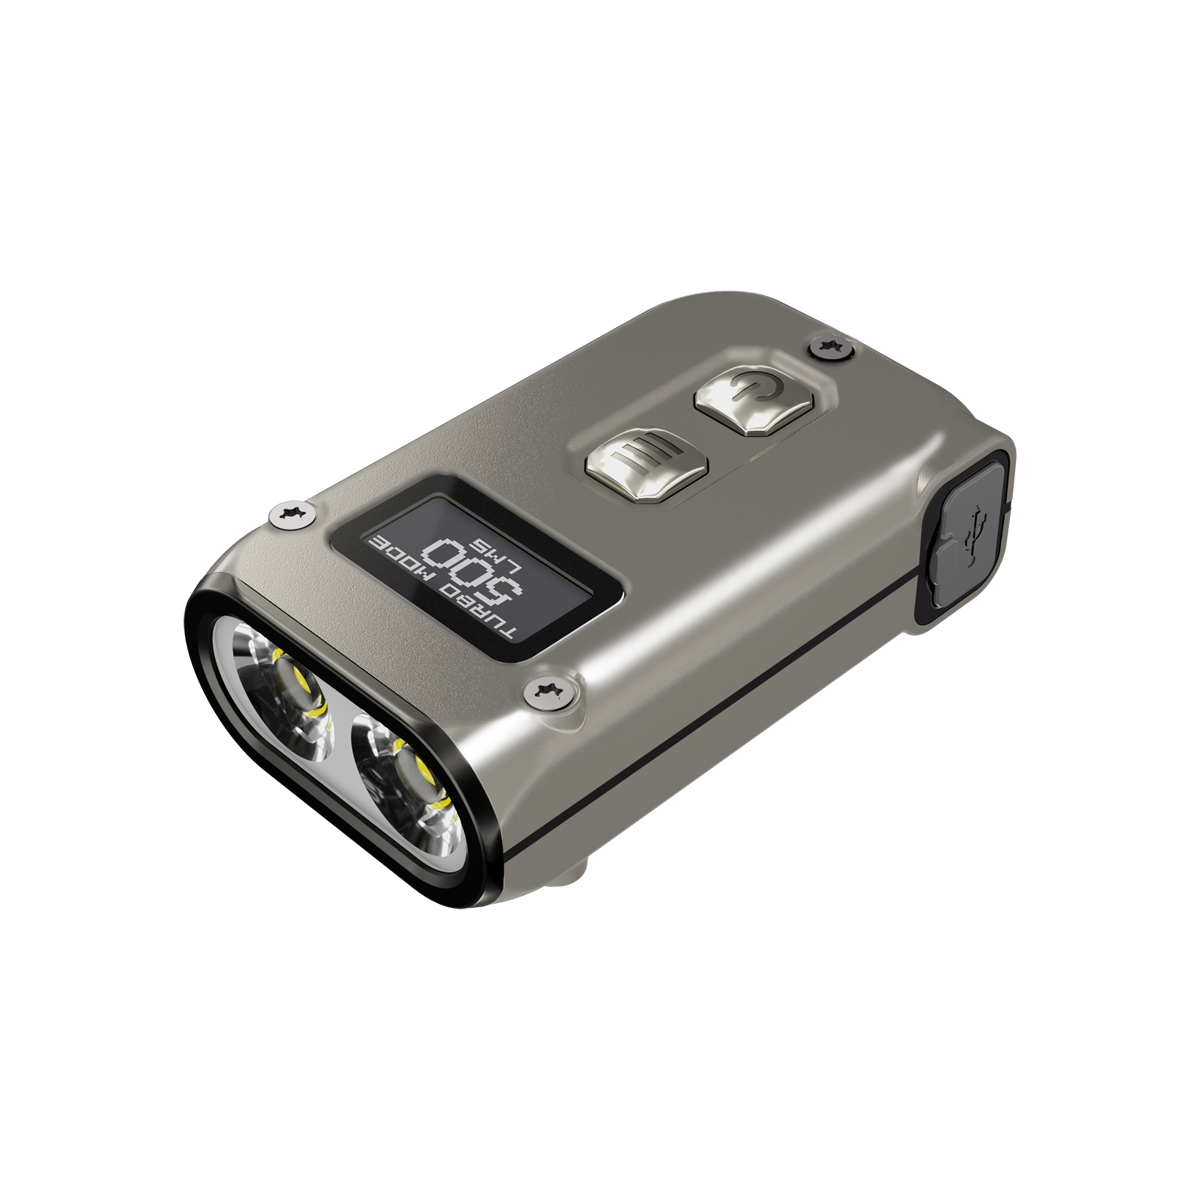 Nitecore TINI2 SS / TINI2 Ti 2x OSRAM P8 LED 500 Lumens Dual-Core Intelligent USB-C Rechargeable Keychain Light